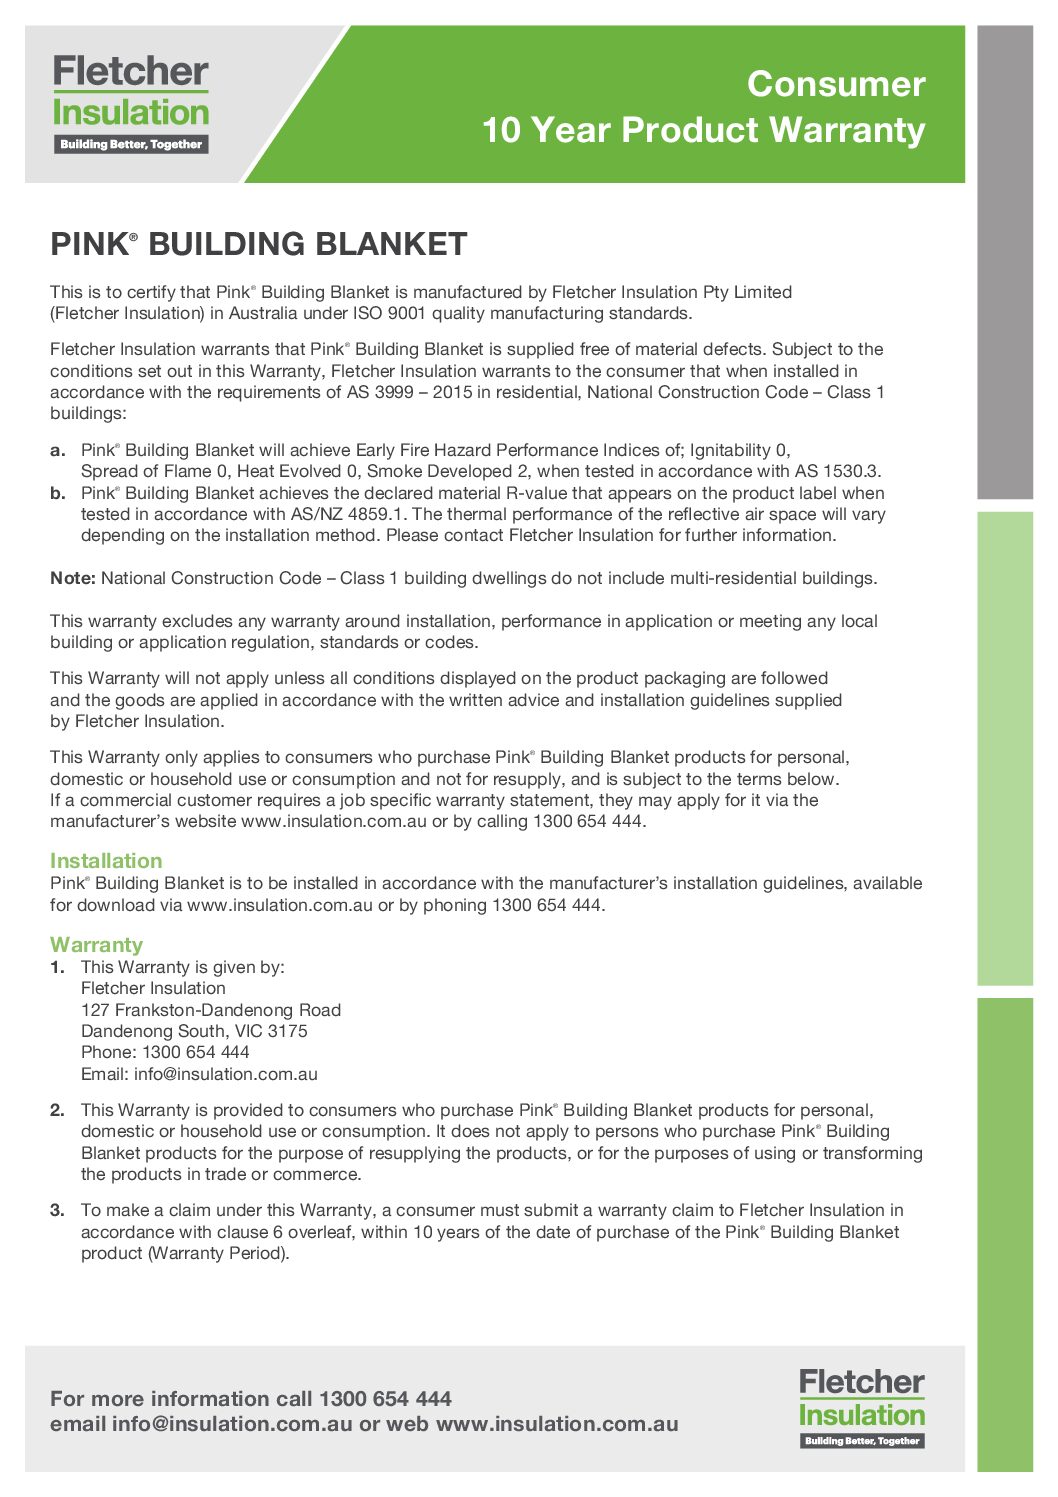 Pink® Building Blanket Consumer Warranty